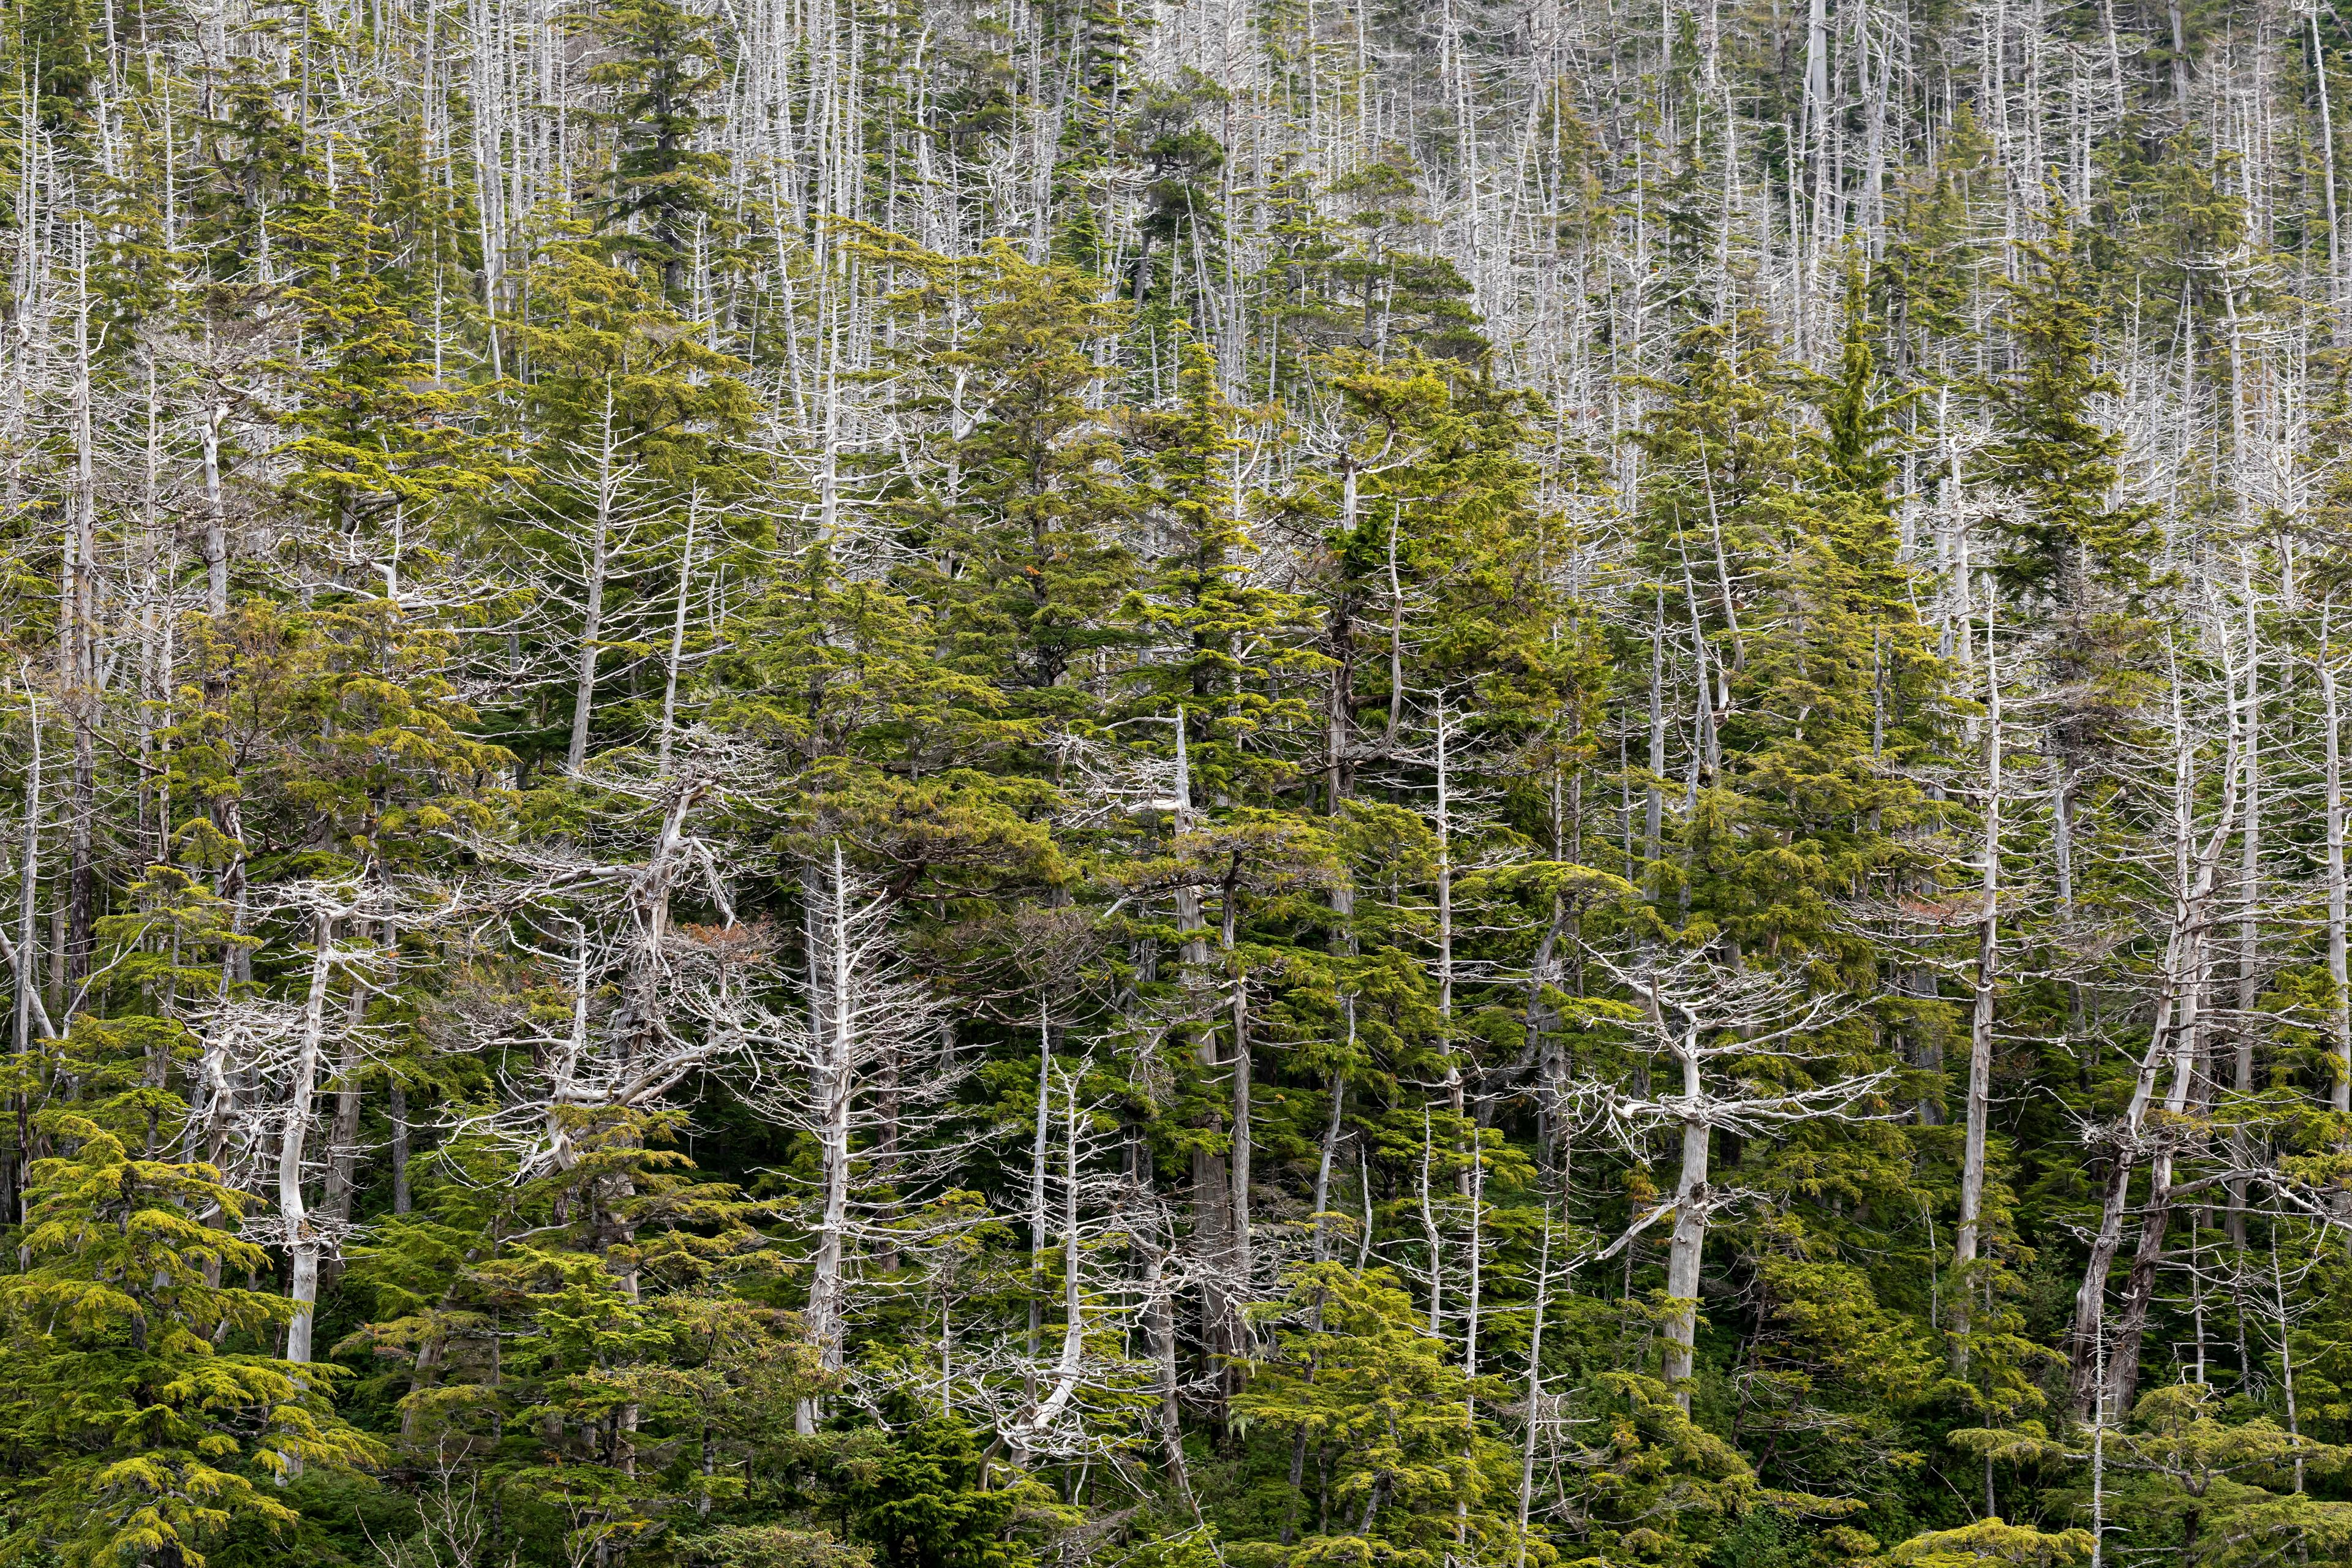 USA, Alaska, Tongass National Forest. Dying yellow cedar trees. | Image Credit: © Danita Delimont - stock.adobe.com.